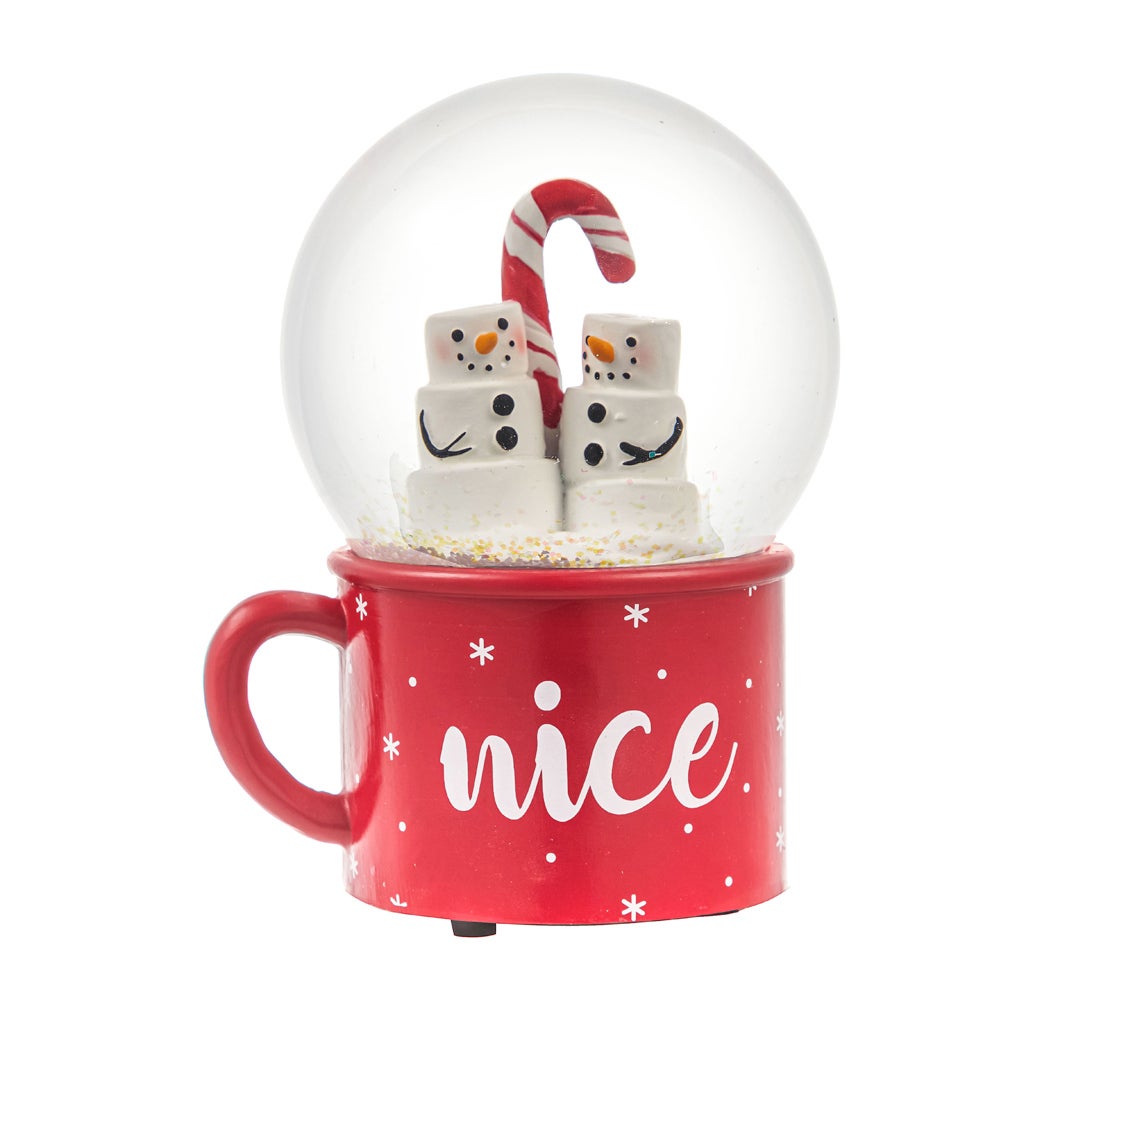 6" Resin Marshmallow Snowman Waterglobe with "Nice" Mug Base